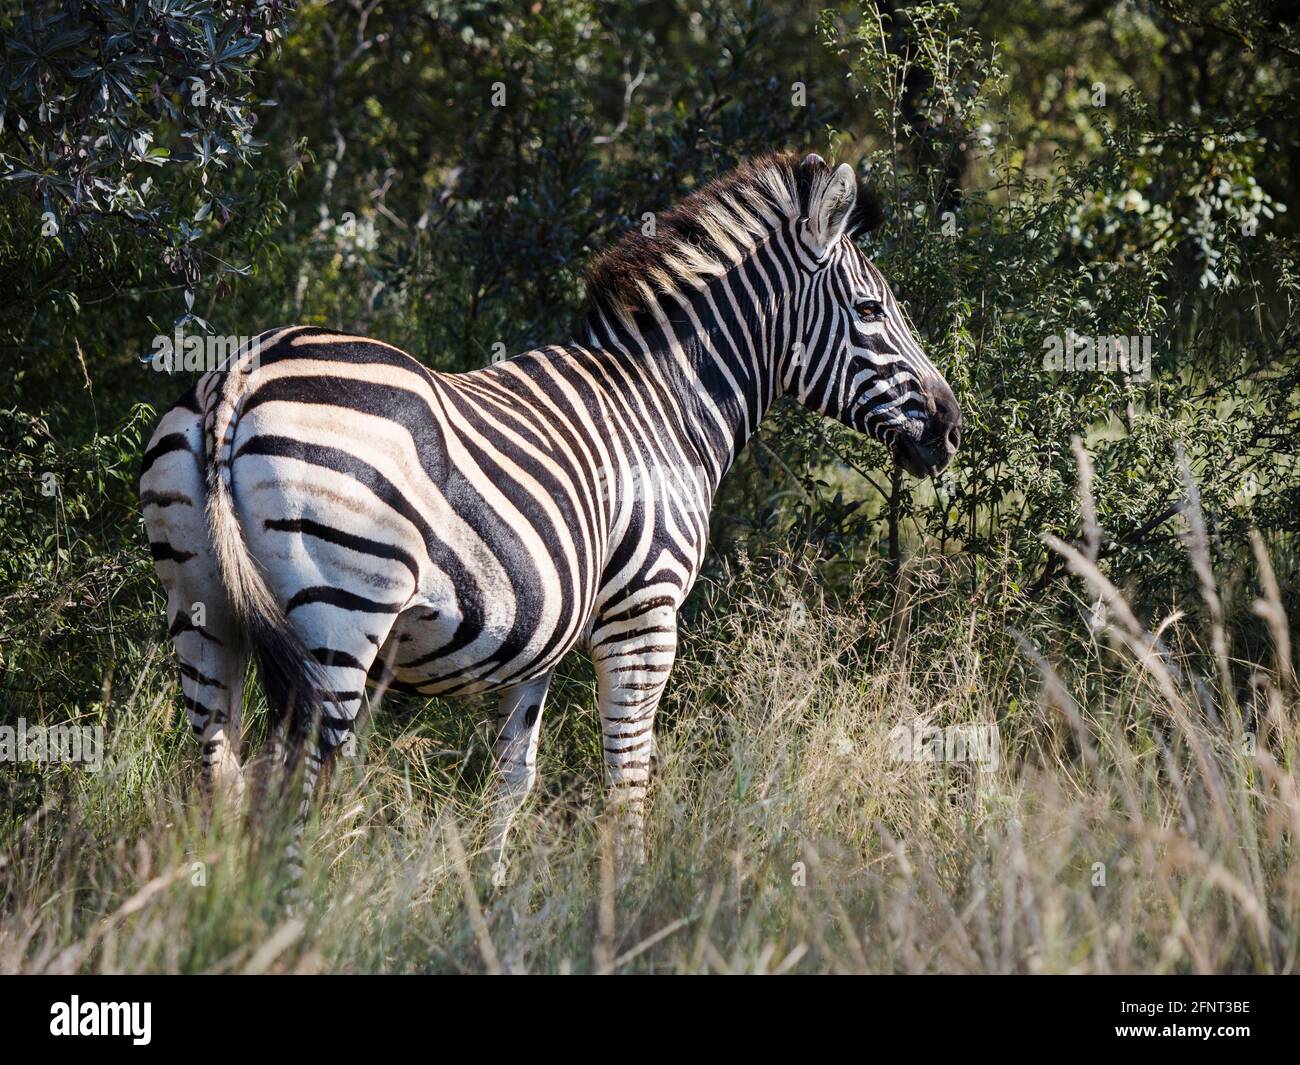 Zebra standing in tall the grass in the sun full-length shot Stock Photo